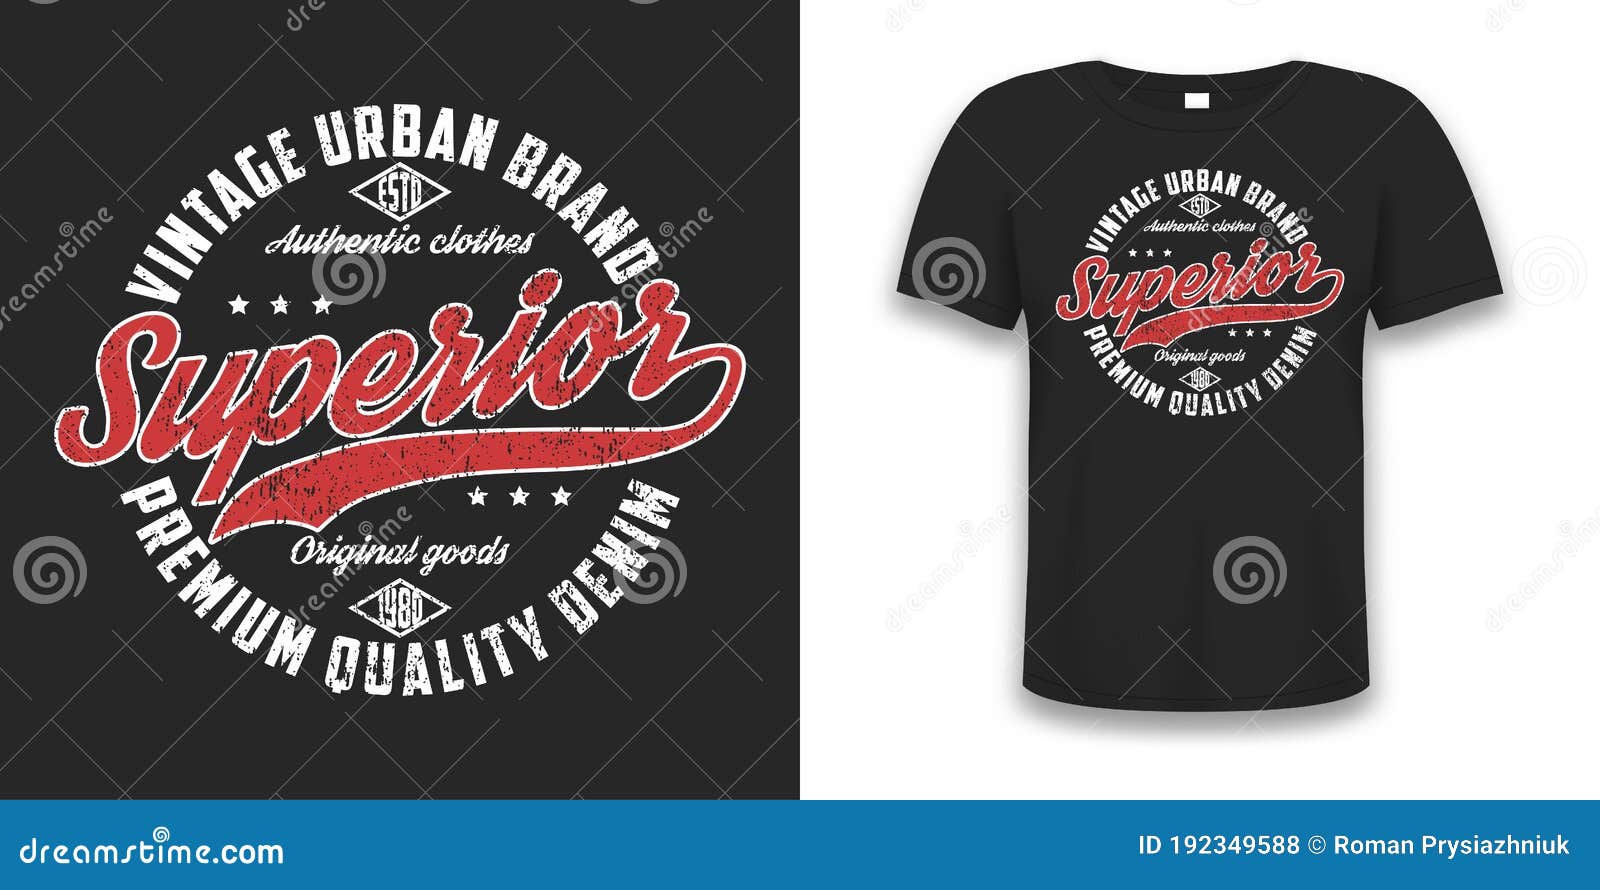 Superior Denim, Vintage Urban Brand Graphic for T-shirt. Original Clothes  Design with Grunge Stock Vector - Illustration of balck, college: 192349588